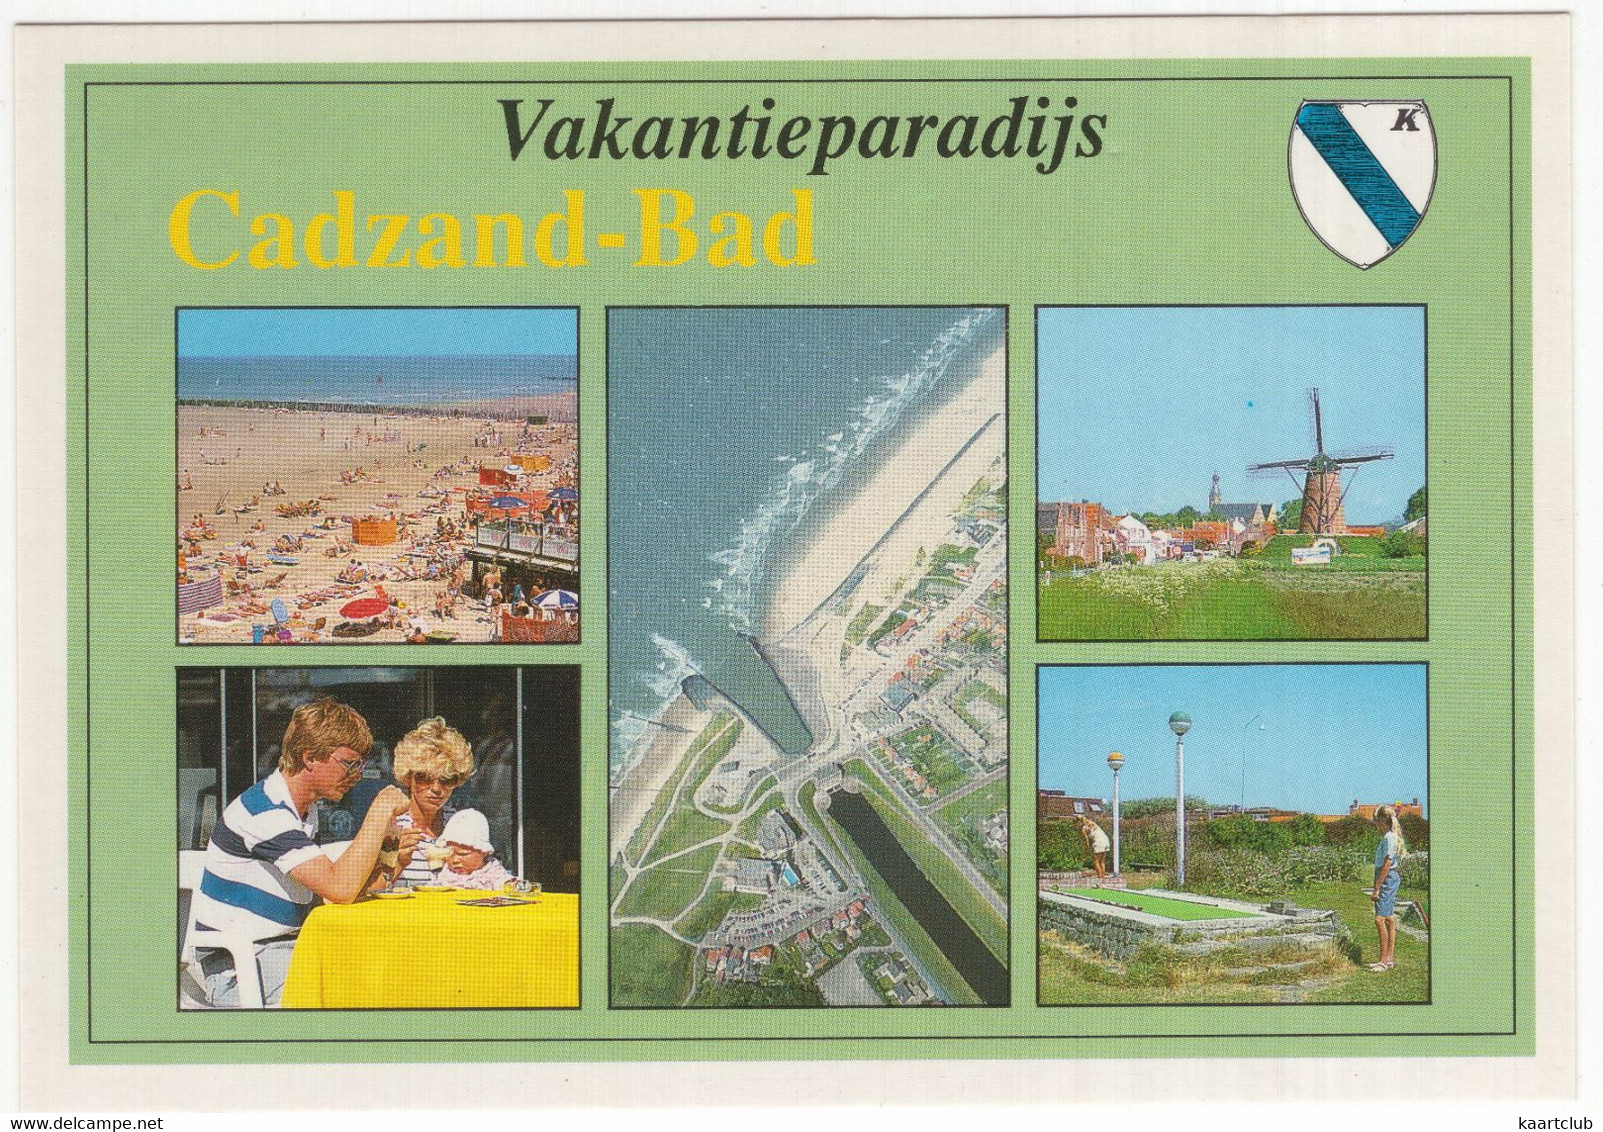 Vakantieparadijs Cadzand-Bad  - (Zeeland, Nederland / Holland) - CAD 8 - MINIGOLF / MIDGETGOLF - Cadzand